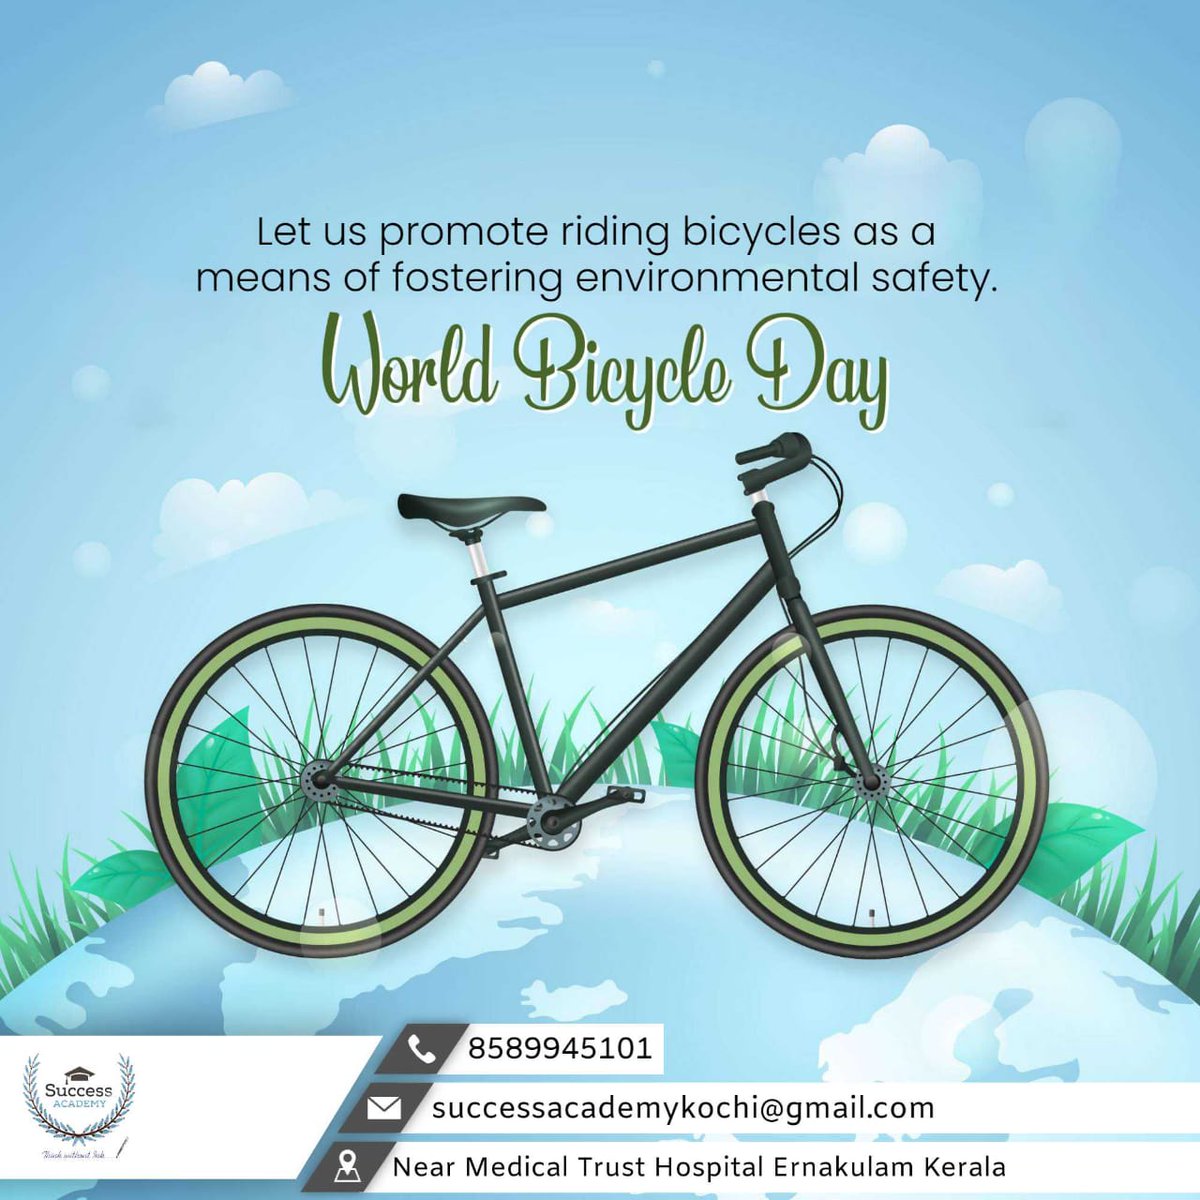 #WorldBicycleDay #BicycleDay #Cycling #BikeLove #PedalPower #TwoWheels #BikeLife #BikeEverywhere #BikeAdventures #HealthyHabits #EcoFriendly #CycleToWork #BikeFun #BikeCommunity #BikeCulture #SSCCoaching #BankCoaching #SuccessAcademyKochi